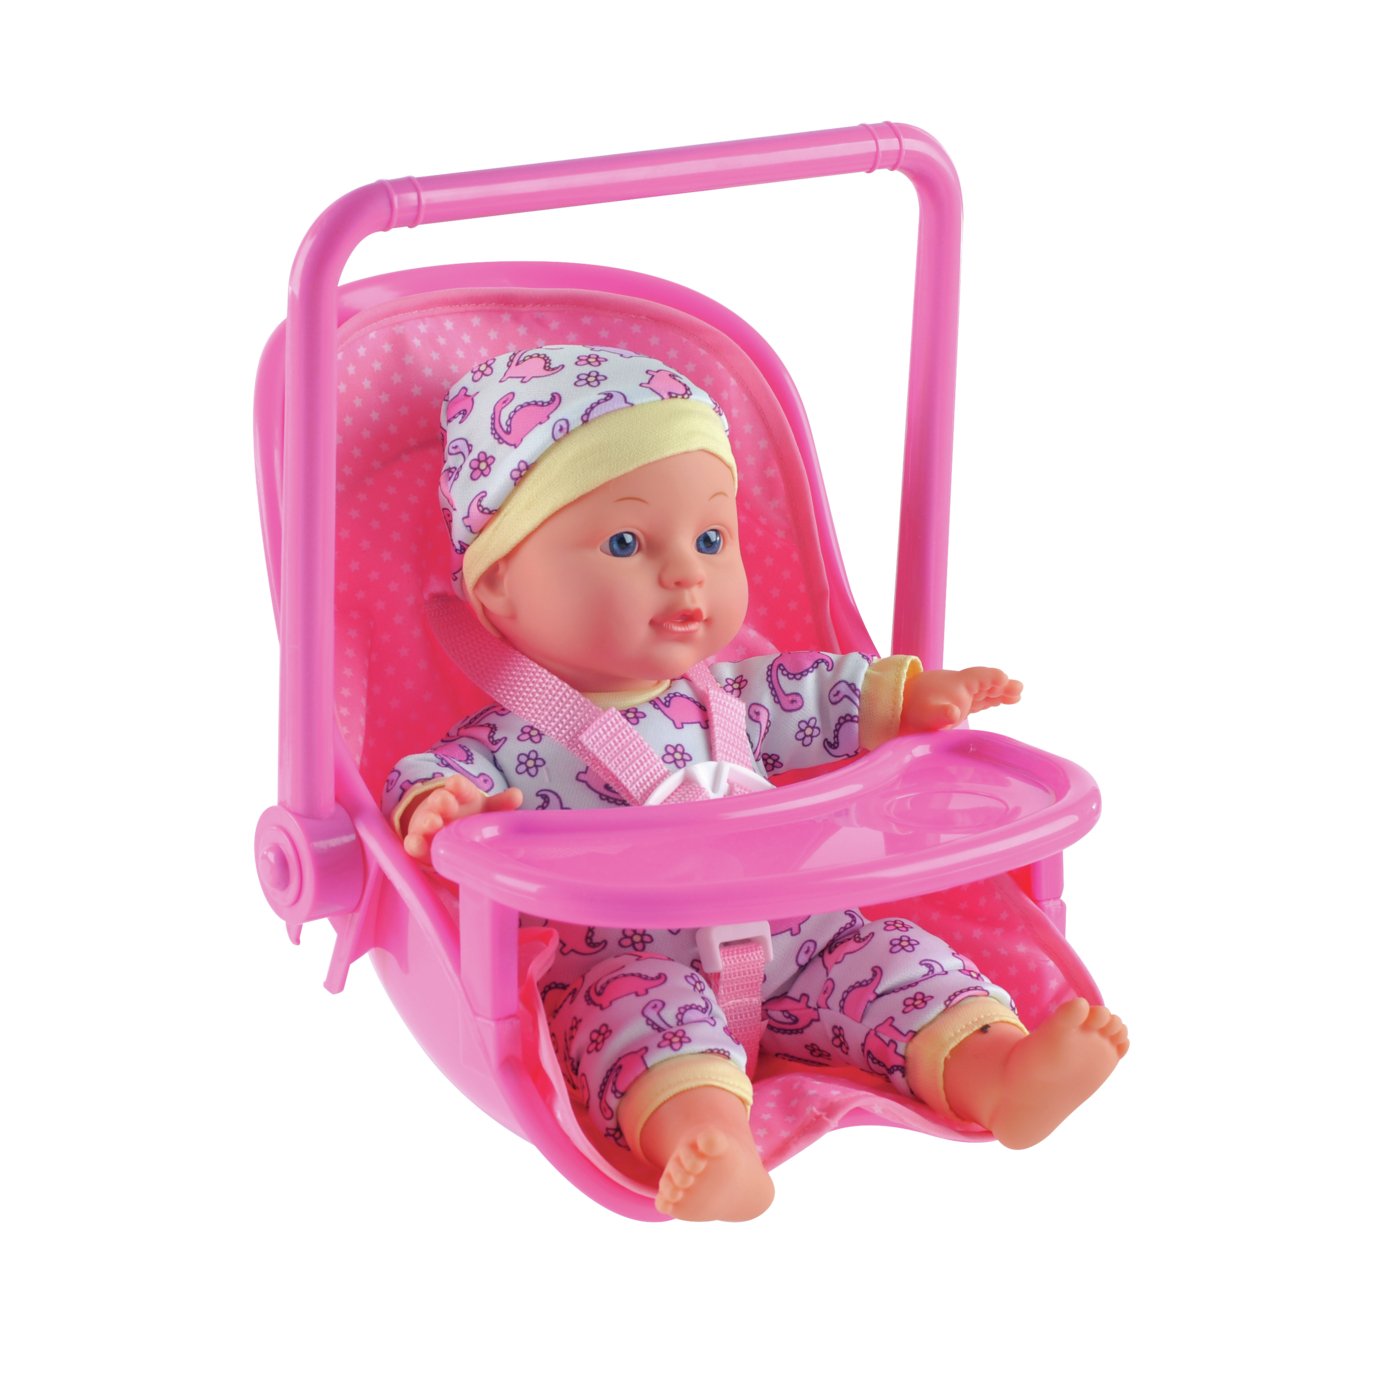 baby doll high chair argos